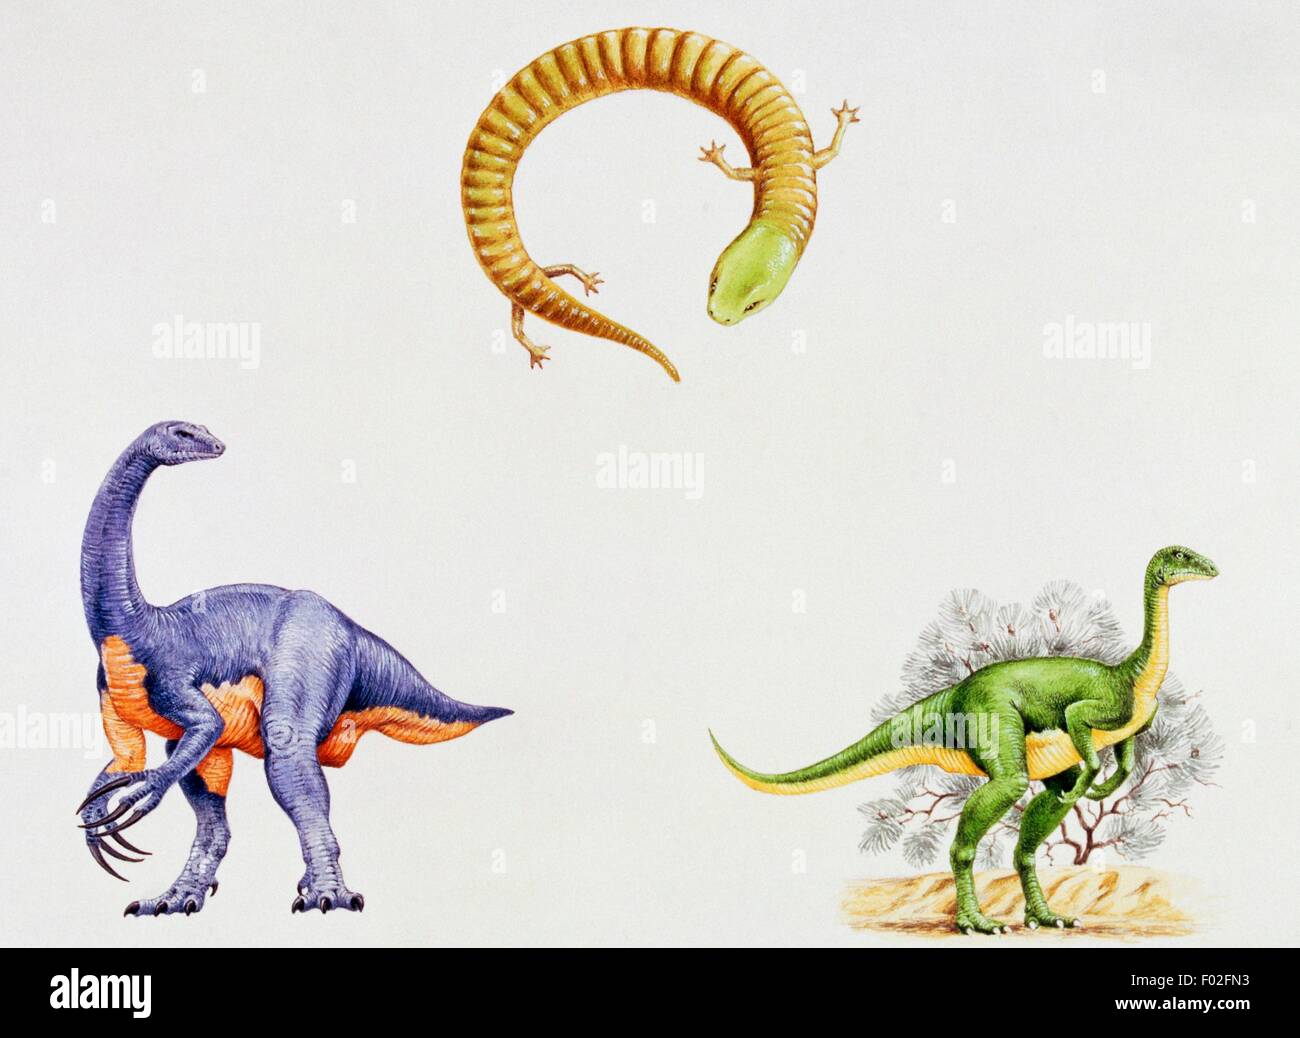 From left, Therizinosaurus cheloniformis, Therizinosauridae, Eocaecilia micropodia, Eocaeciliidae, Timimus hermani, Timimus. Artwork by Nick Pike. Stock Photo